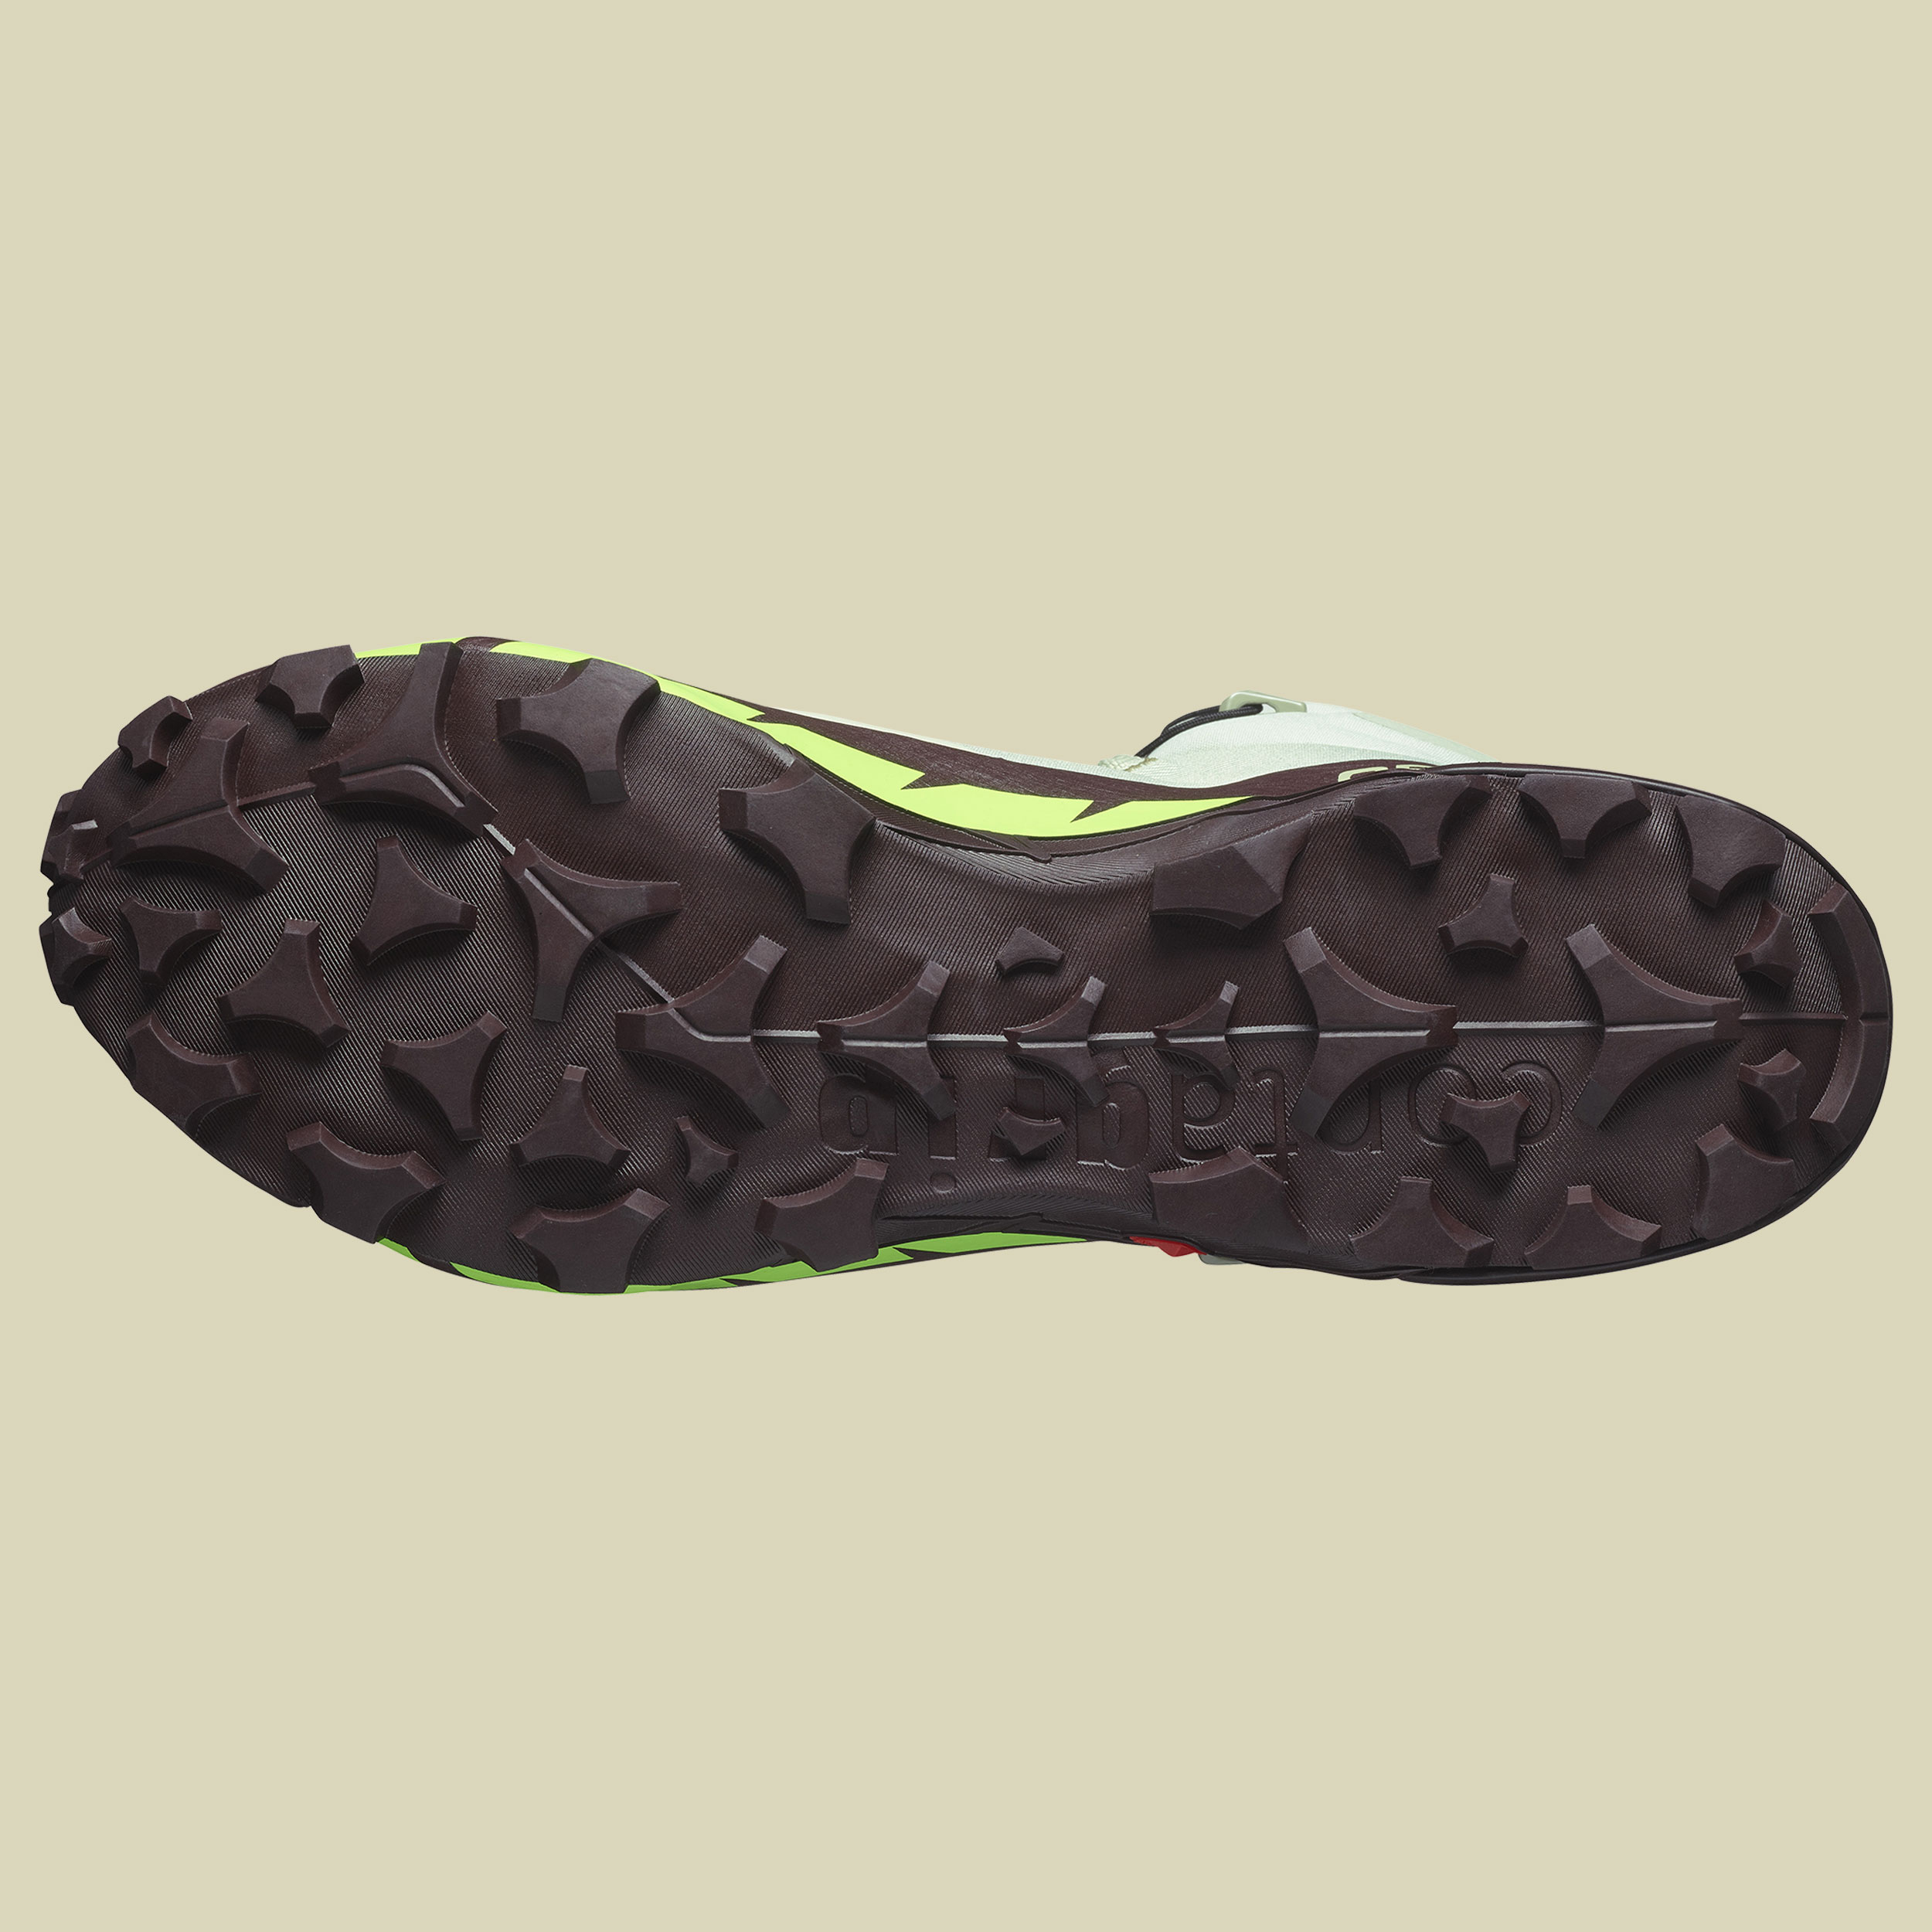 Cross Hike Mid GTX 2 Men Größe UK 8,5 Farbe desert sage/green gecko/chocolate plum